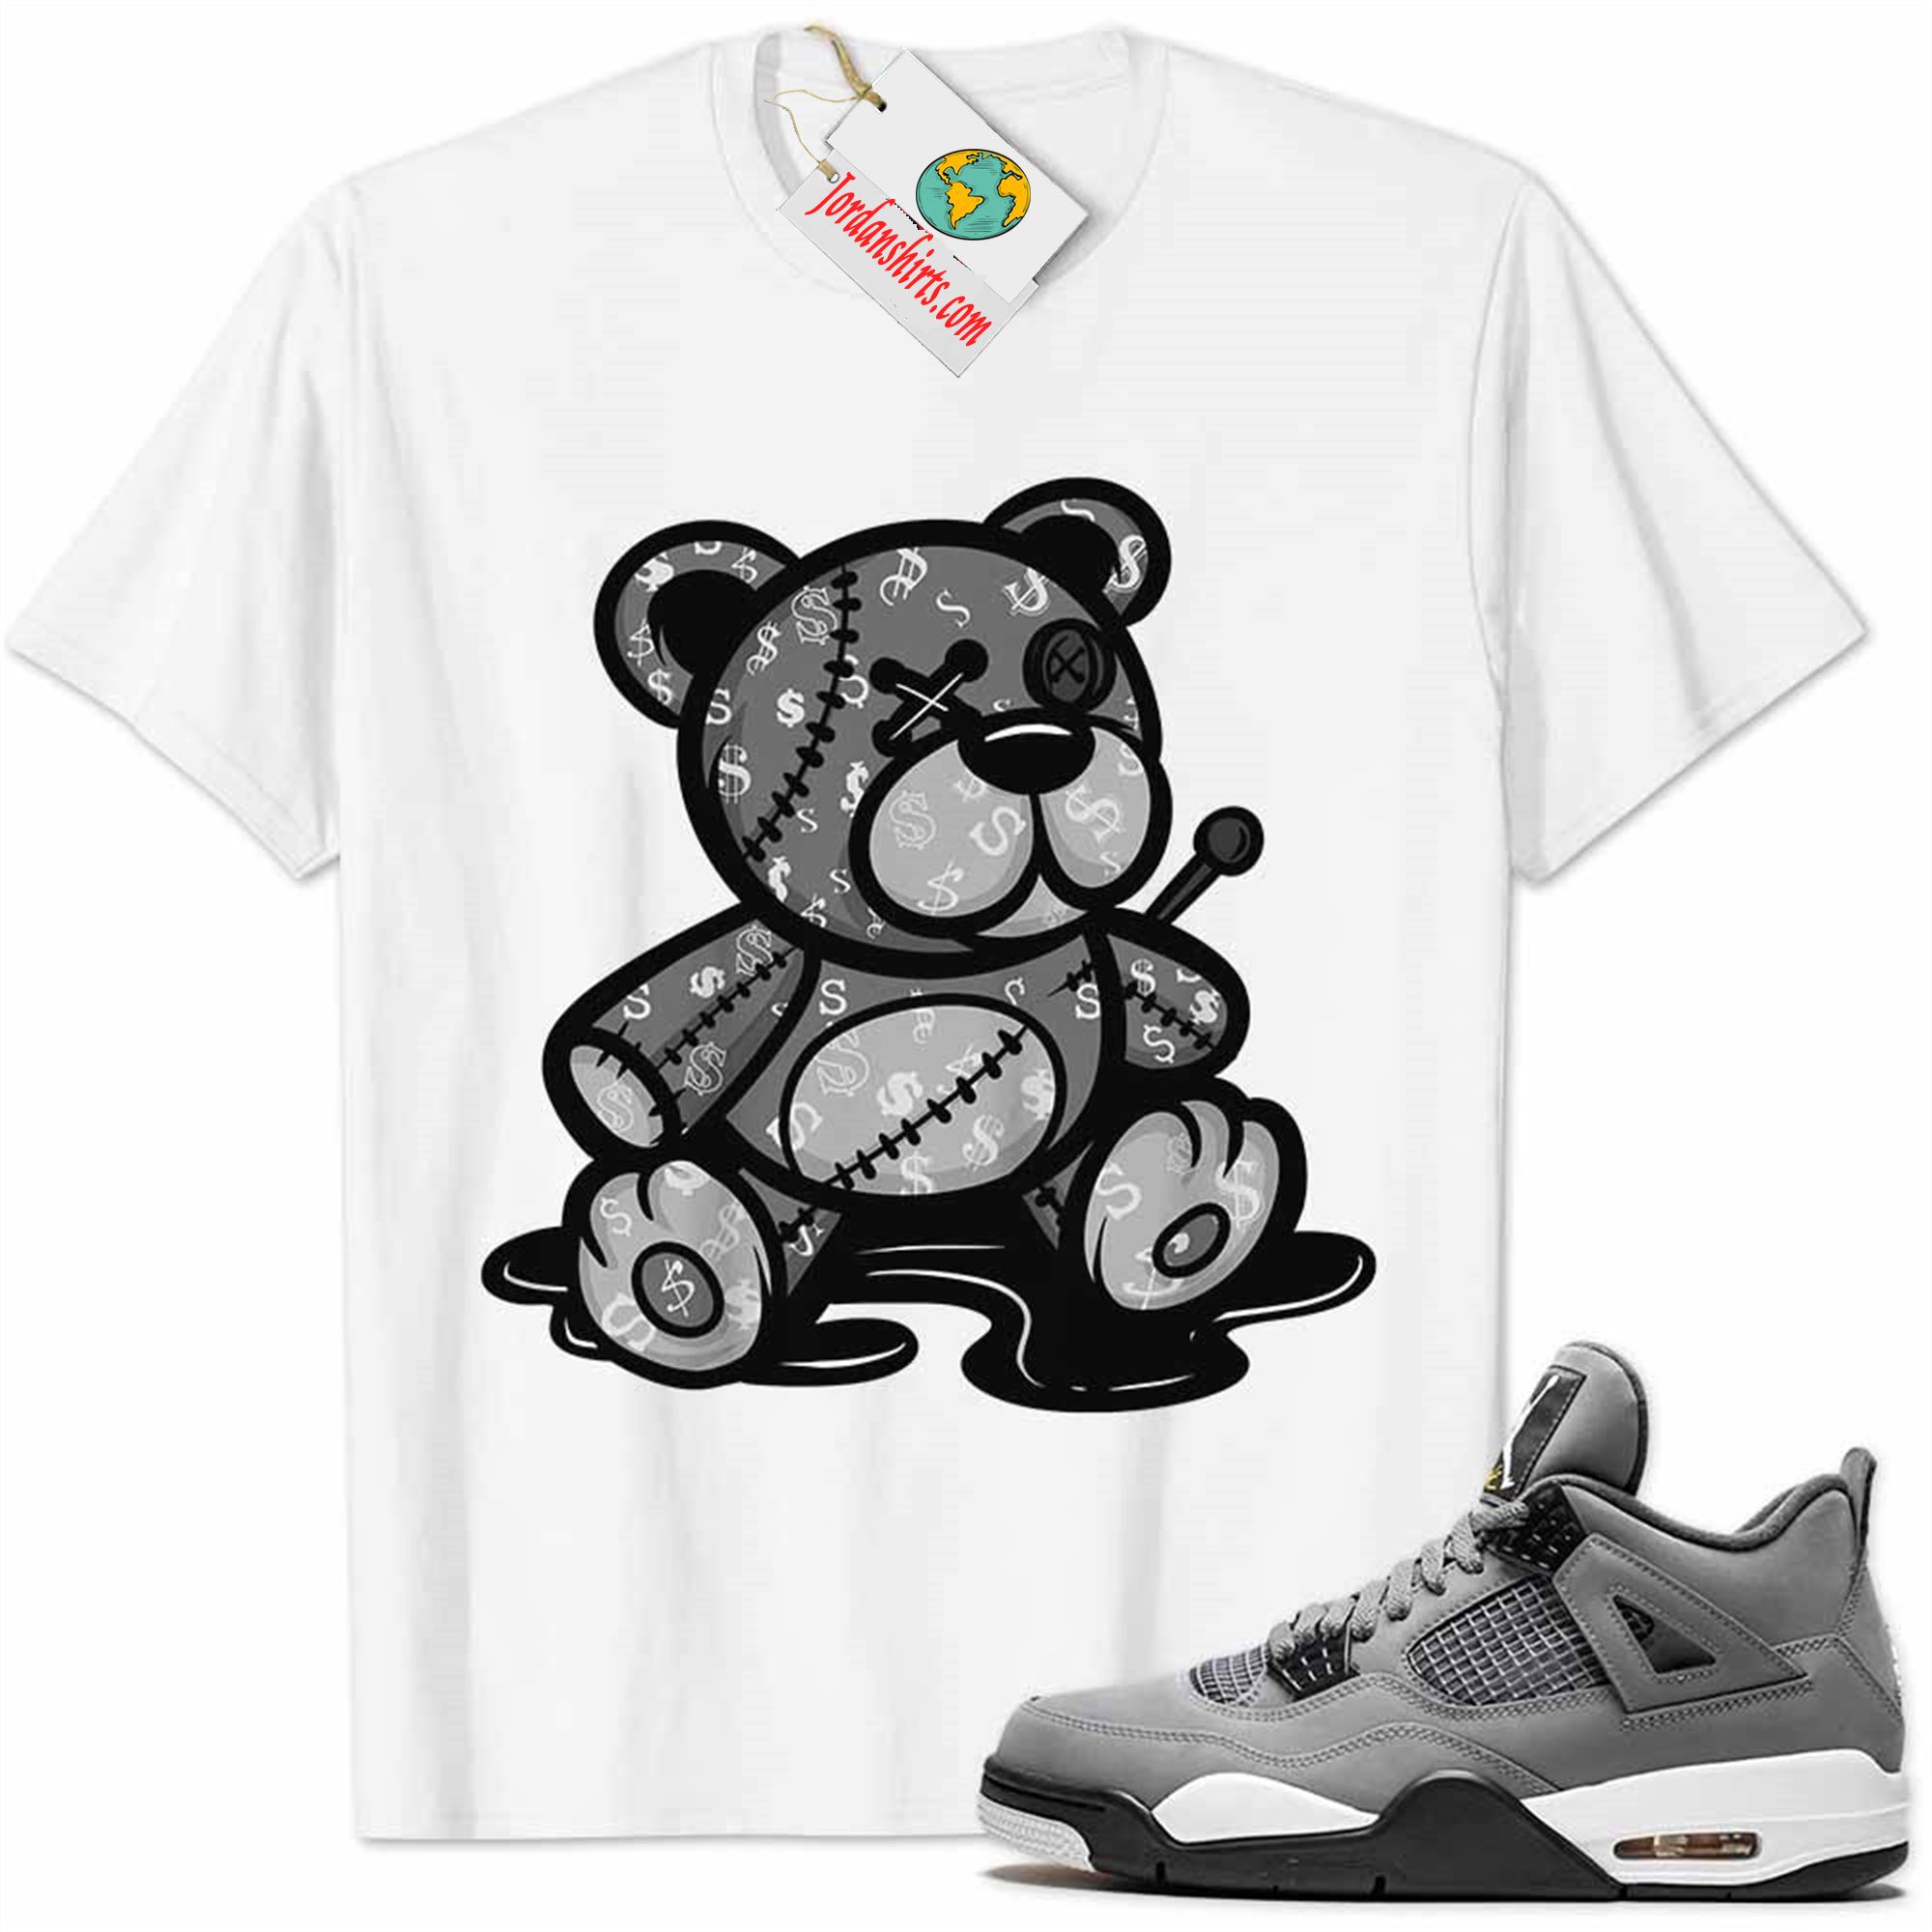 Jordan 4 Shirt, Jordan 4 Cool Grey Shirt Teddy Bear All Money In White Plus Size Up To 5xl